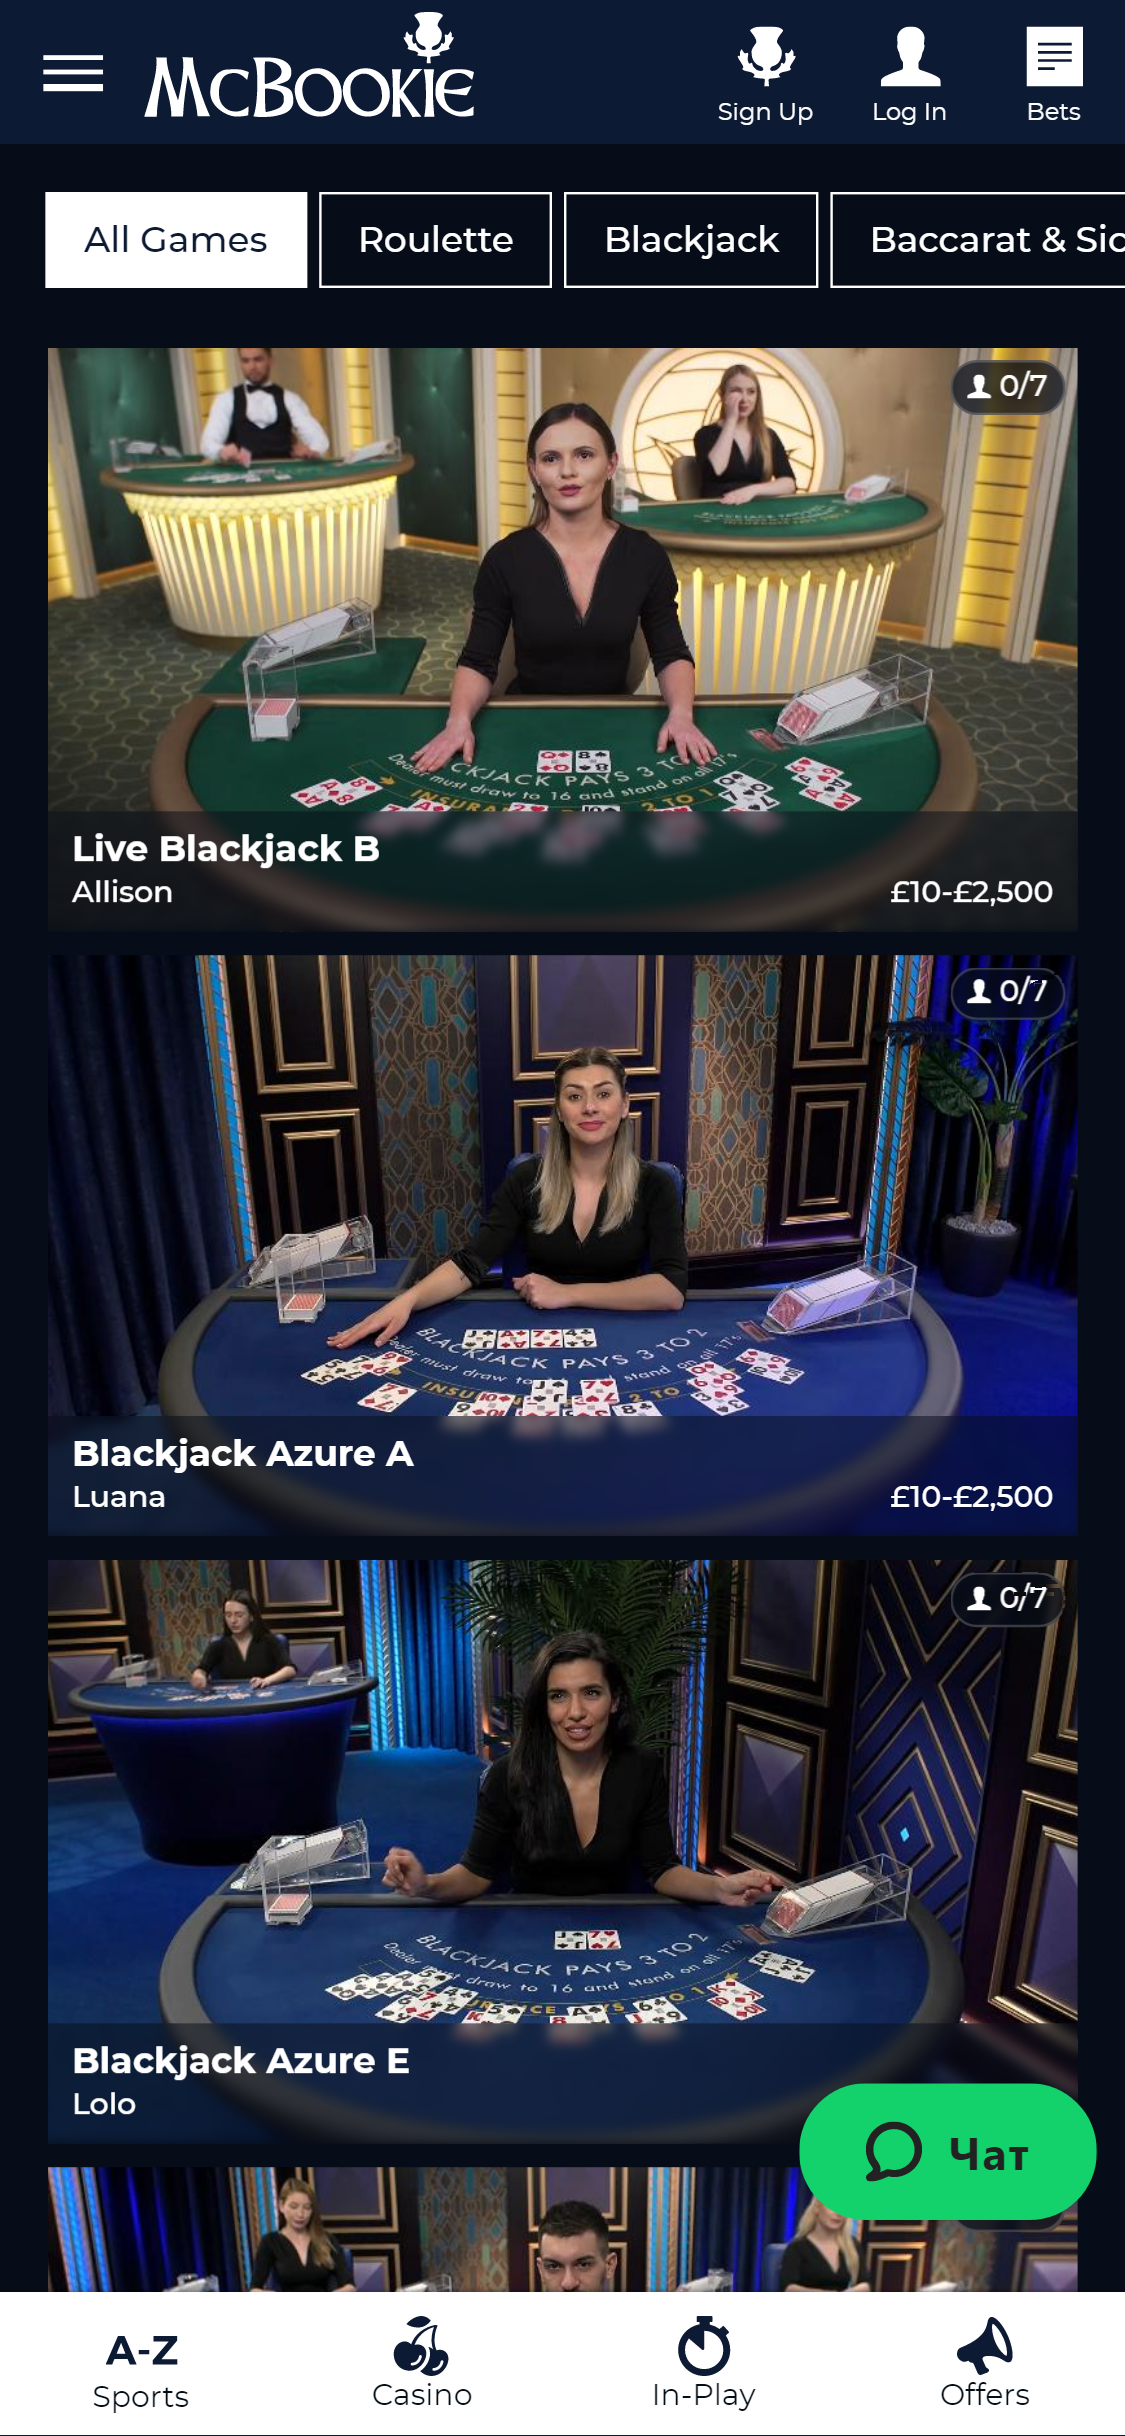 McBookie Casino Mobile Live Dealer Games Review